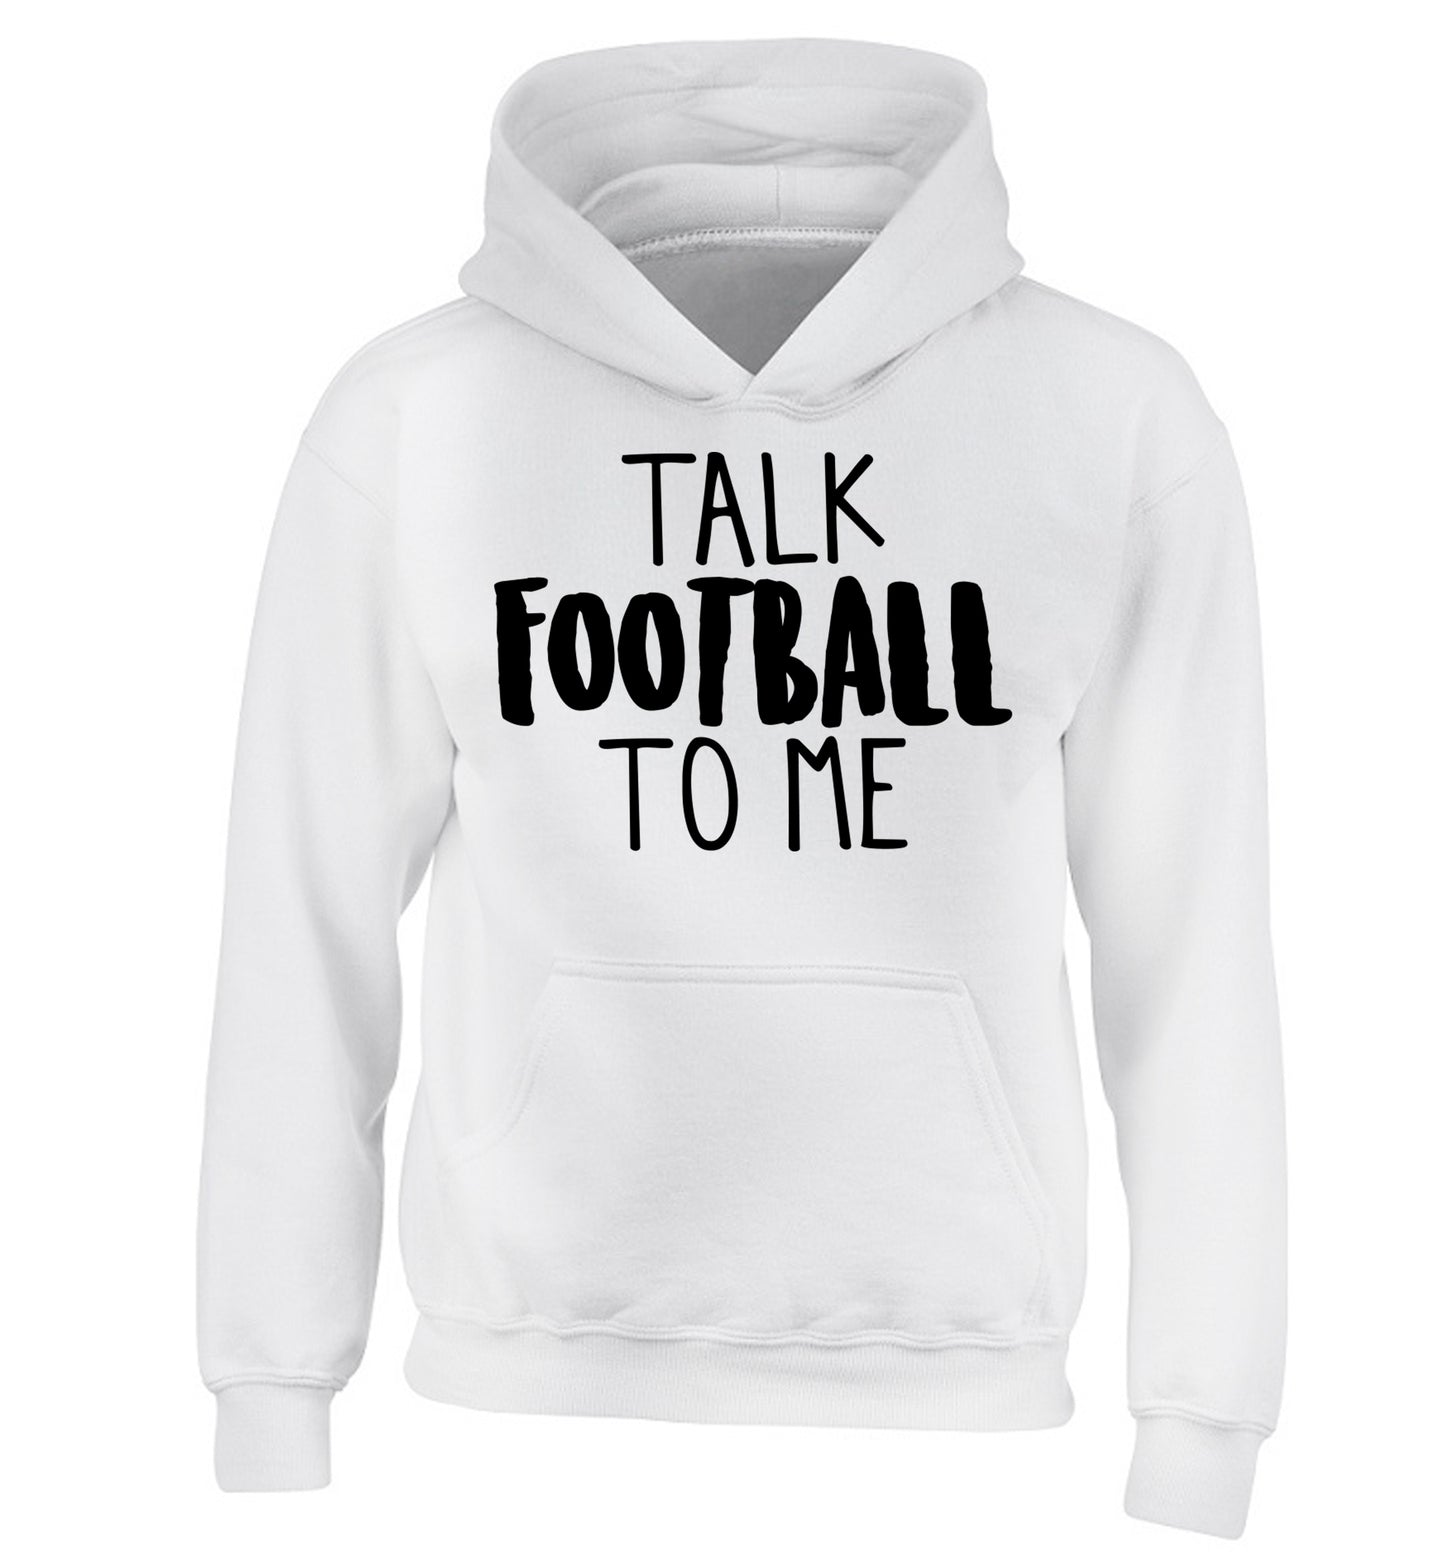 Talk football to me children's white hoodie 12-14 Years